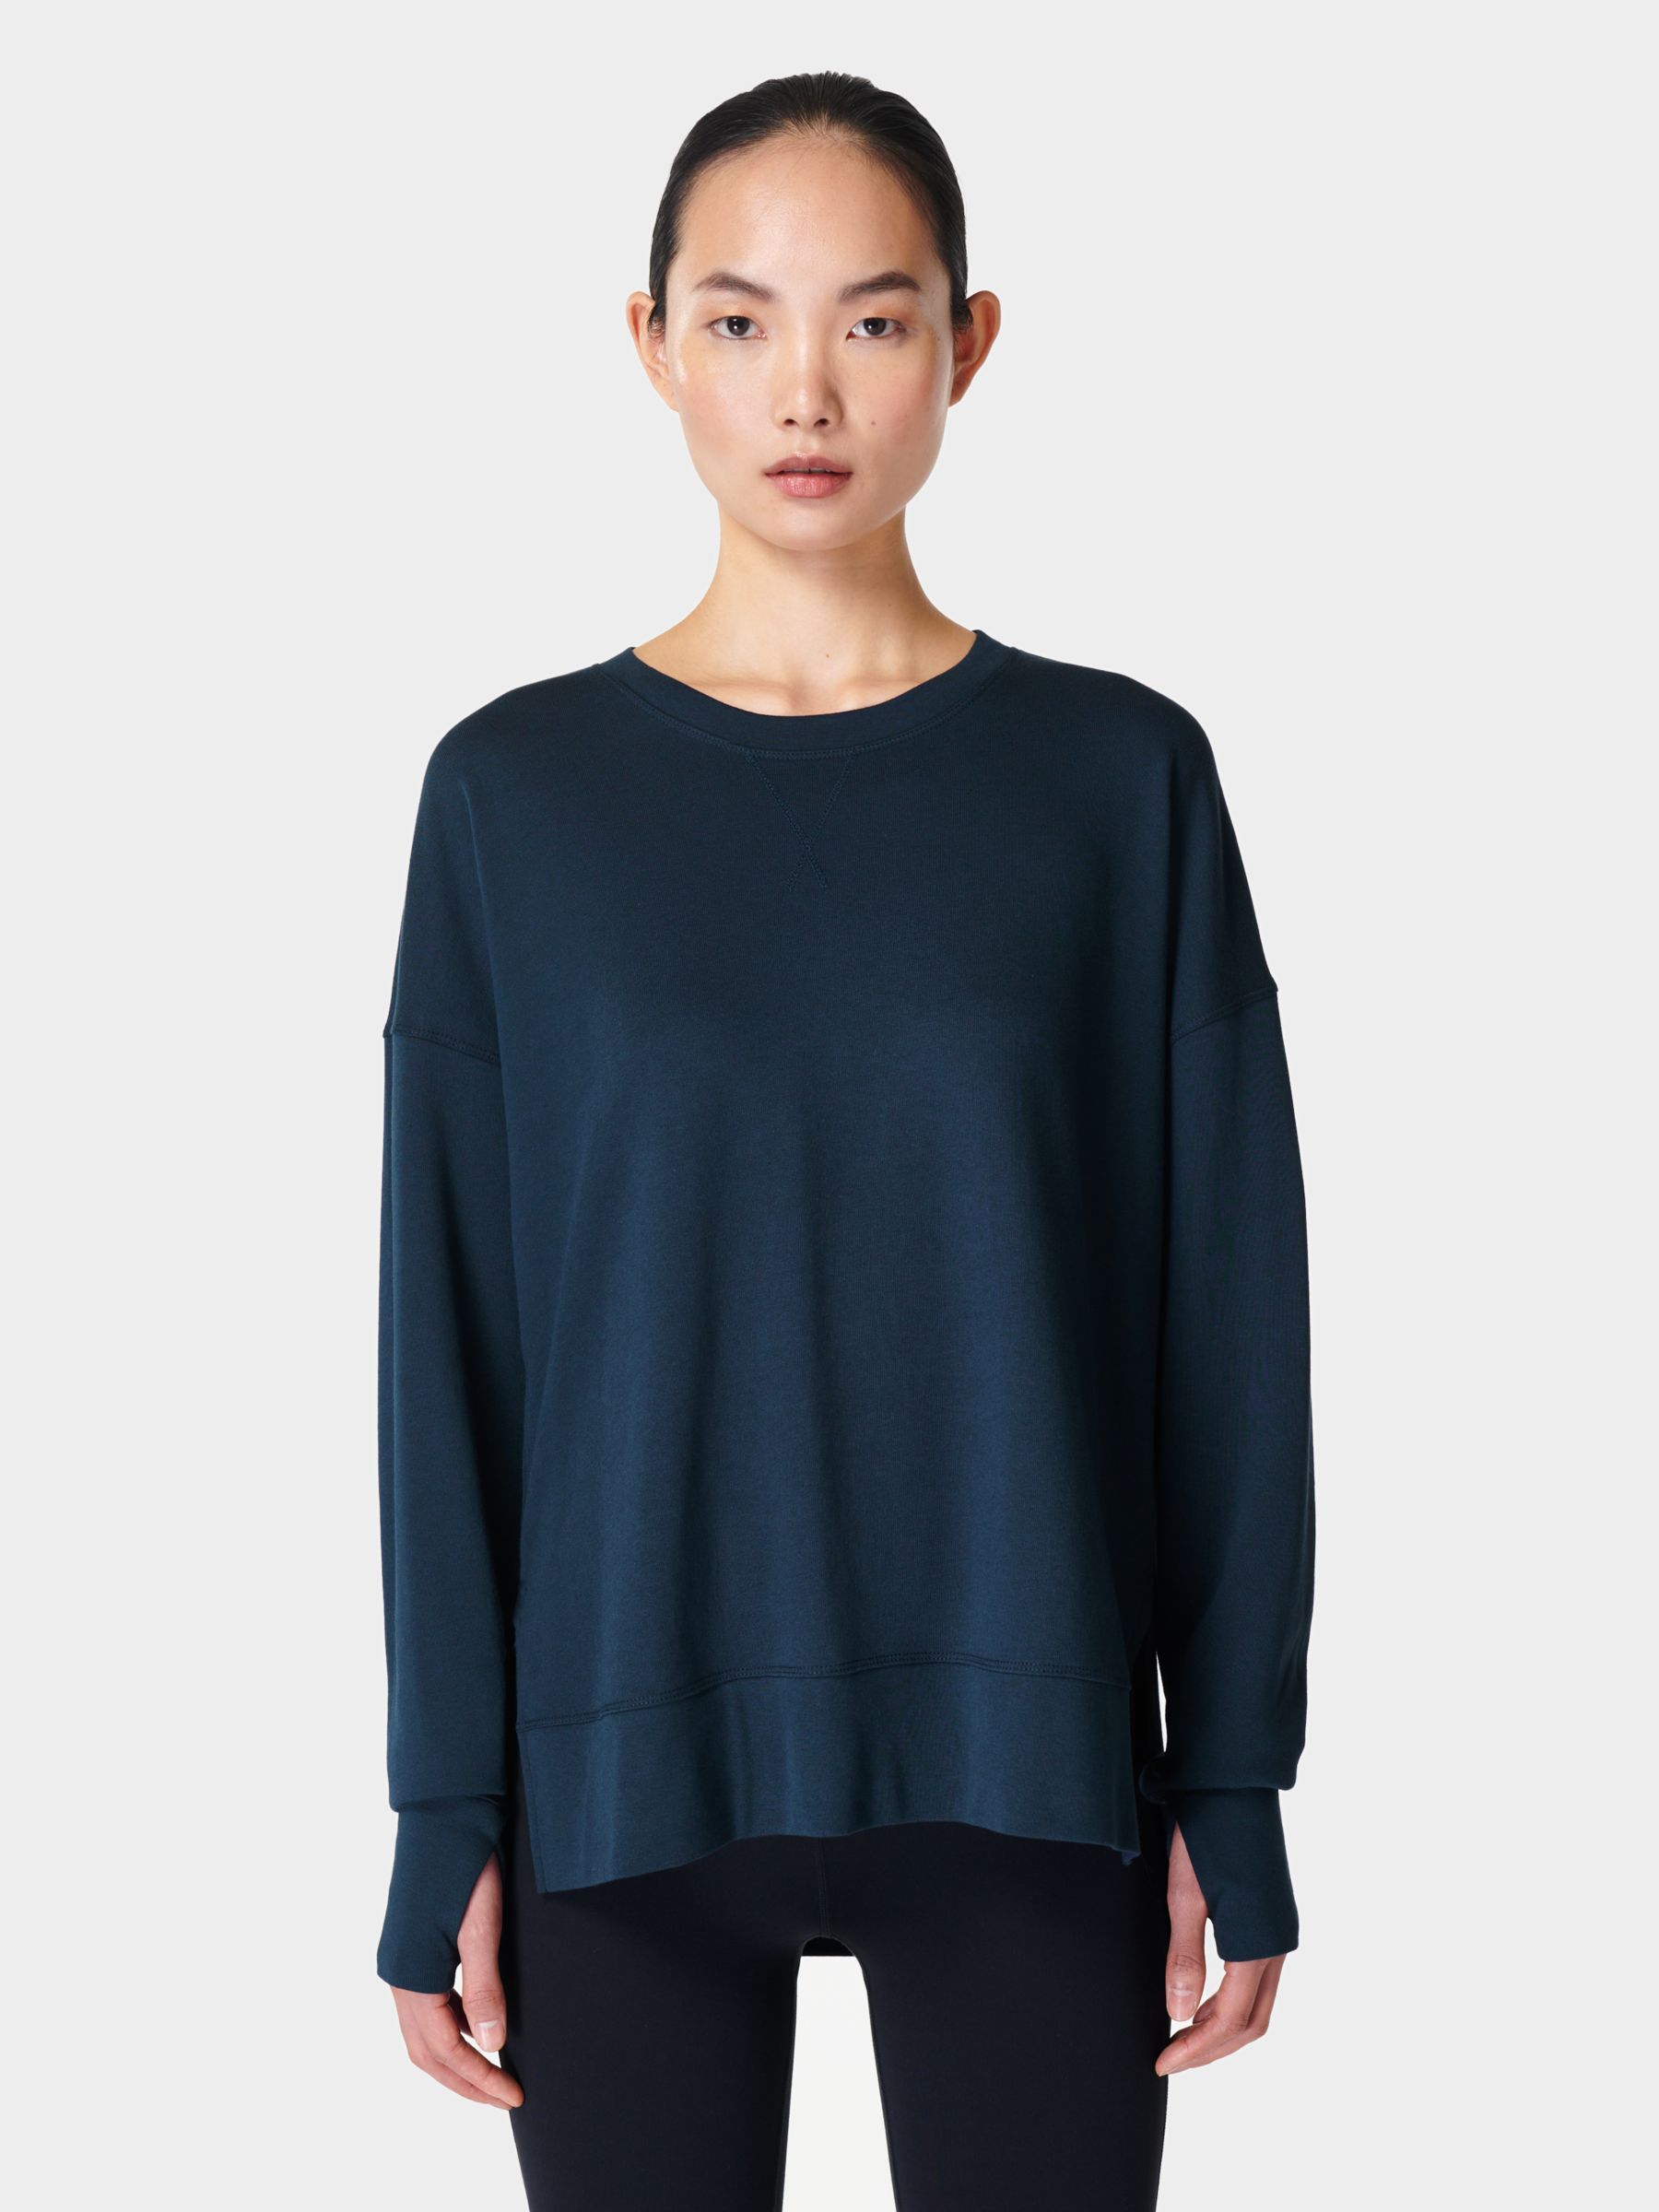 Sweaty Betty Plain Organic Cotton Blend Sweatshirt, Navy Blue, S